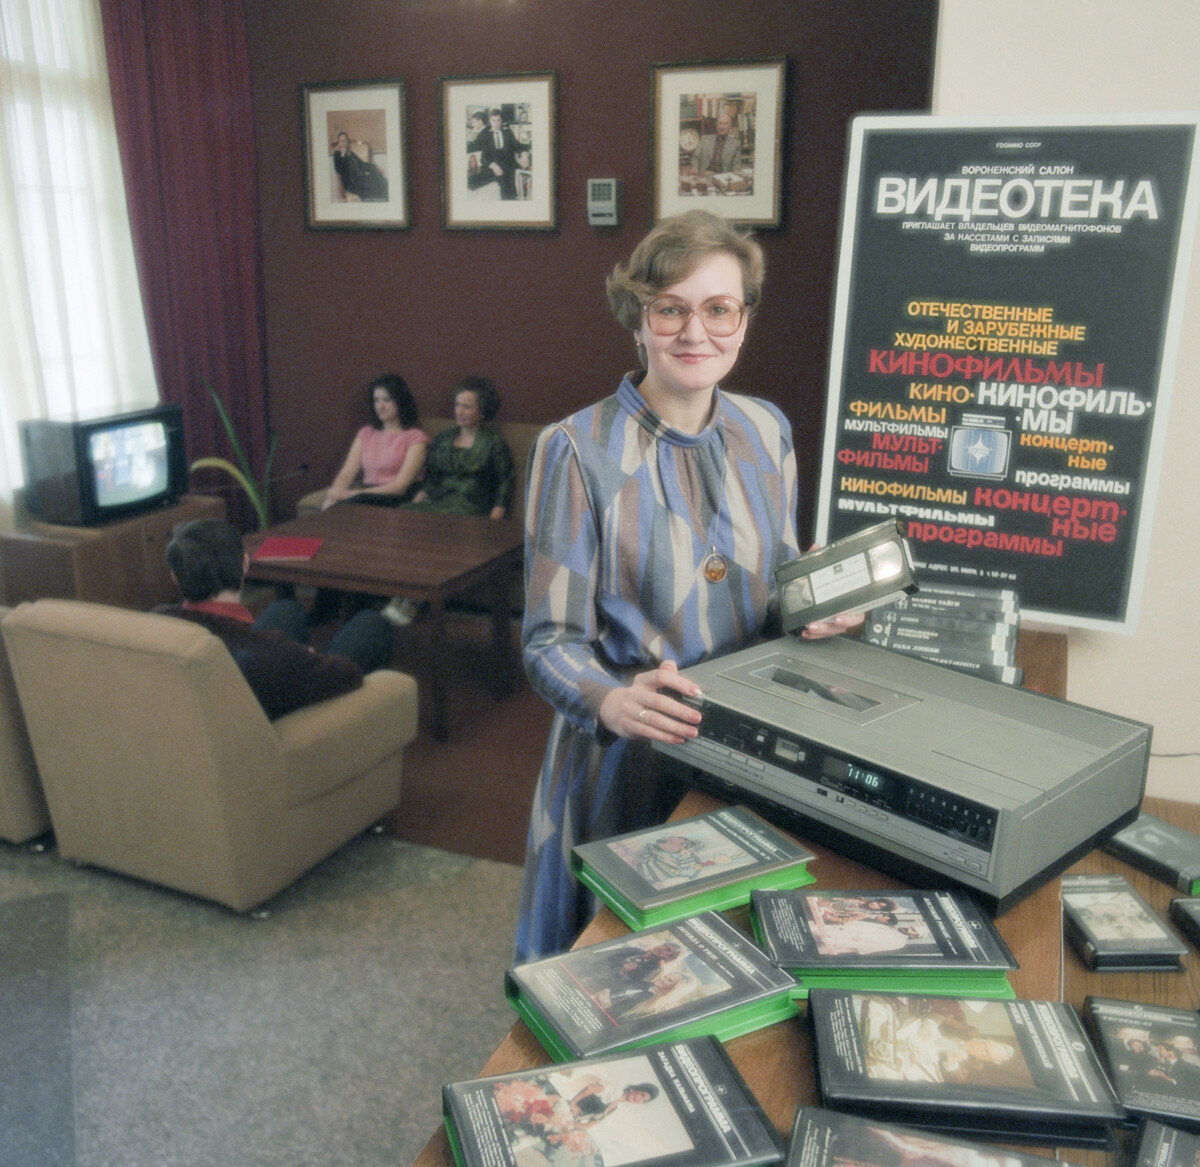 Methodist of the video salon Irina Mentshikova gives out videocassettes, 1988. 